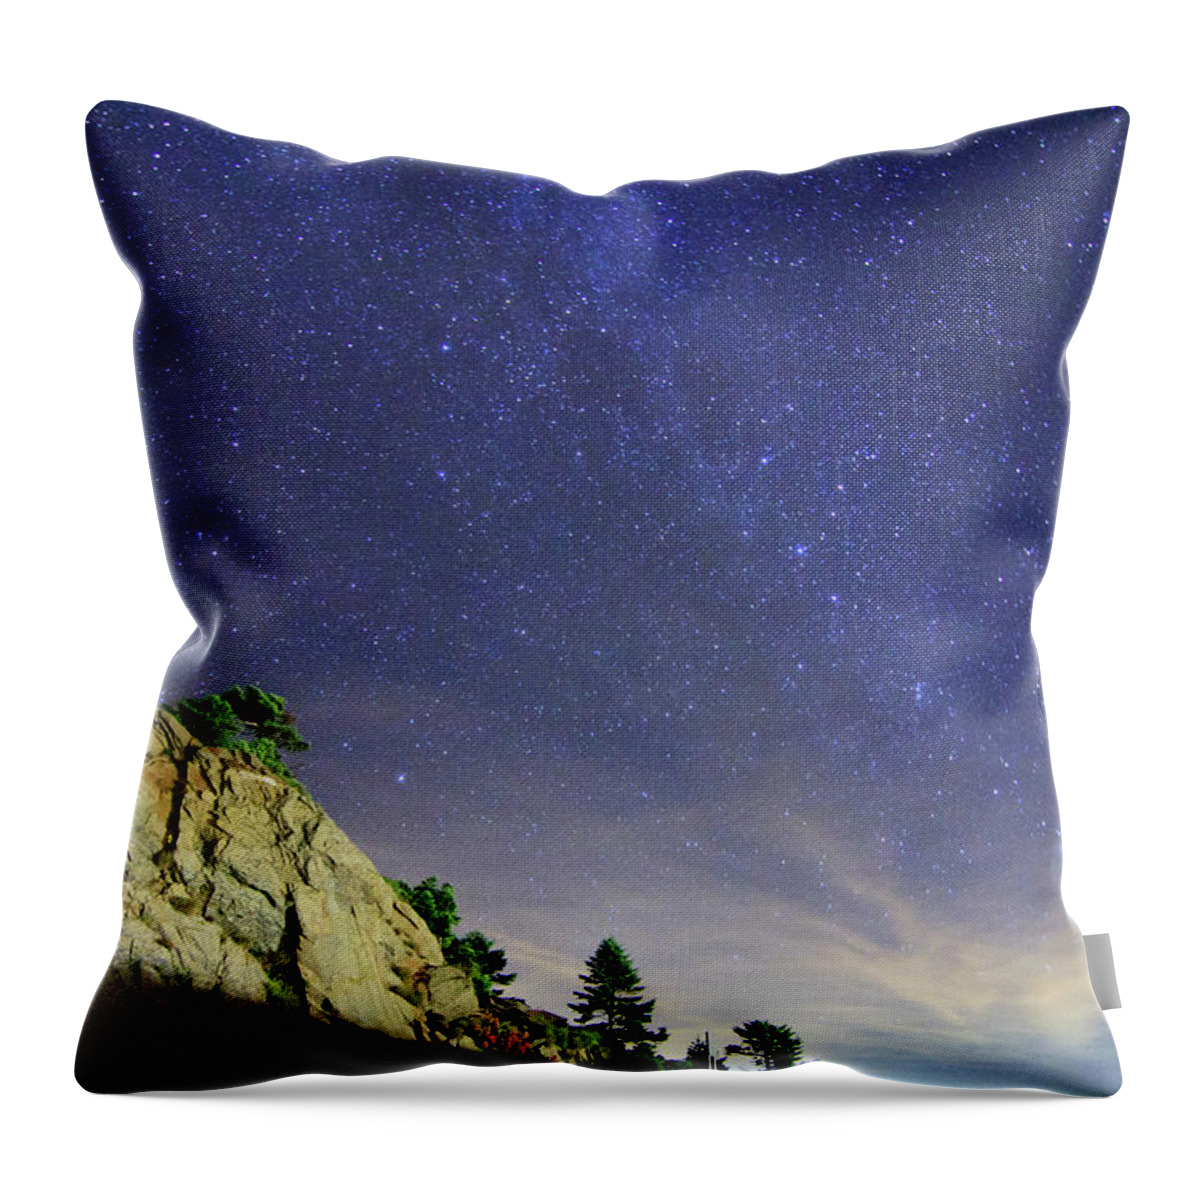 Taiwan Throw Pillow featuring the photograph Mountain Rocks by Samyaoo